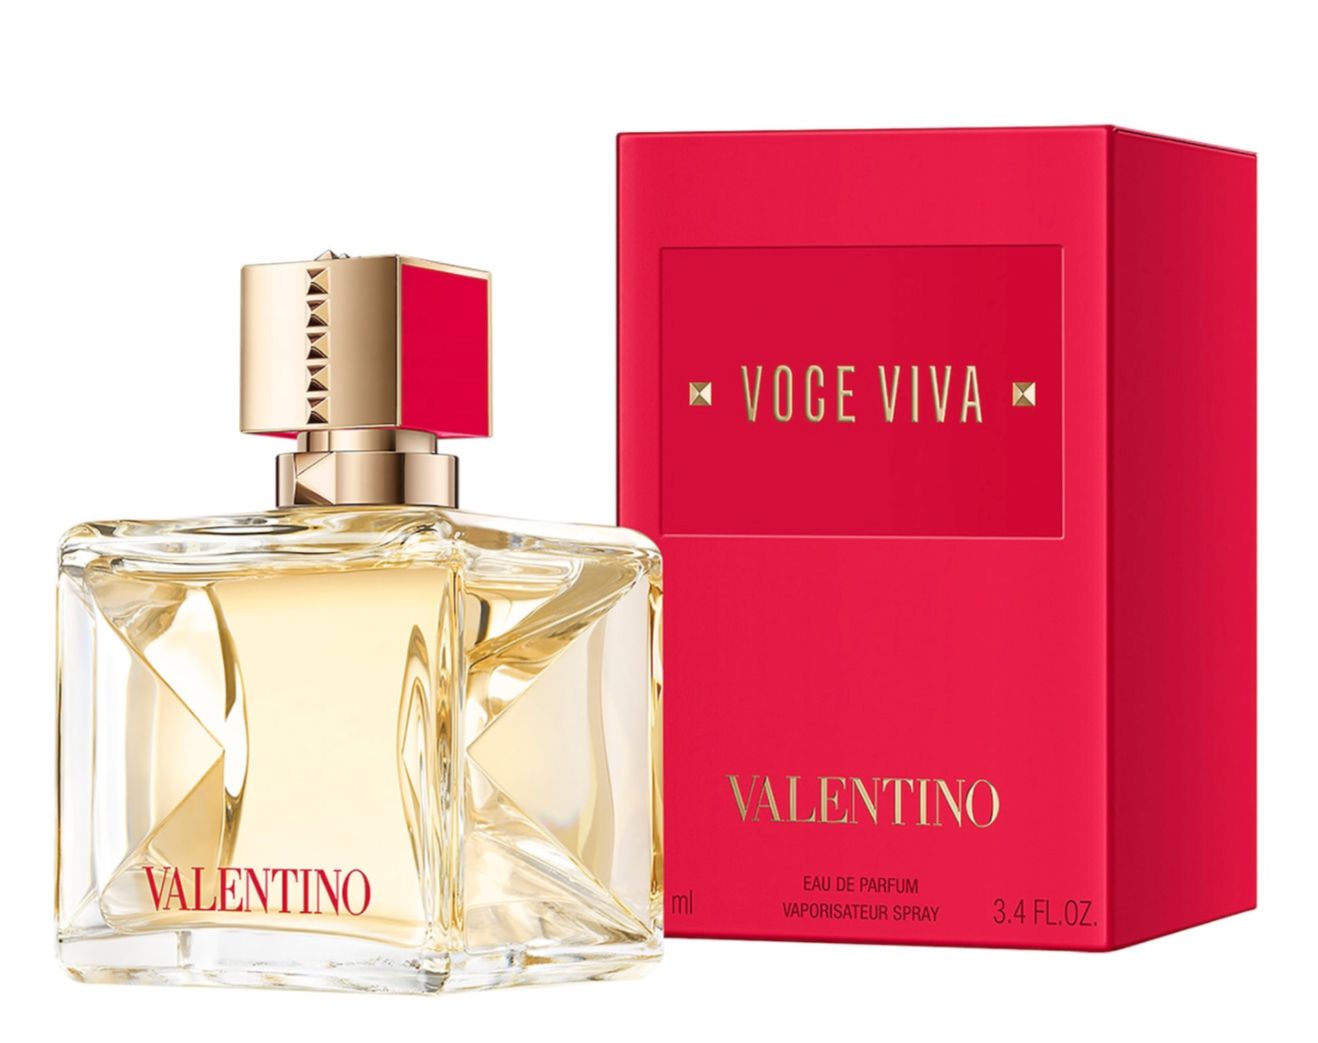 Voce Viva Valentino perfume a new fragrance for women 2020